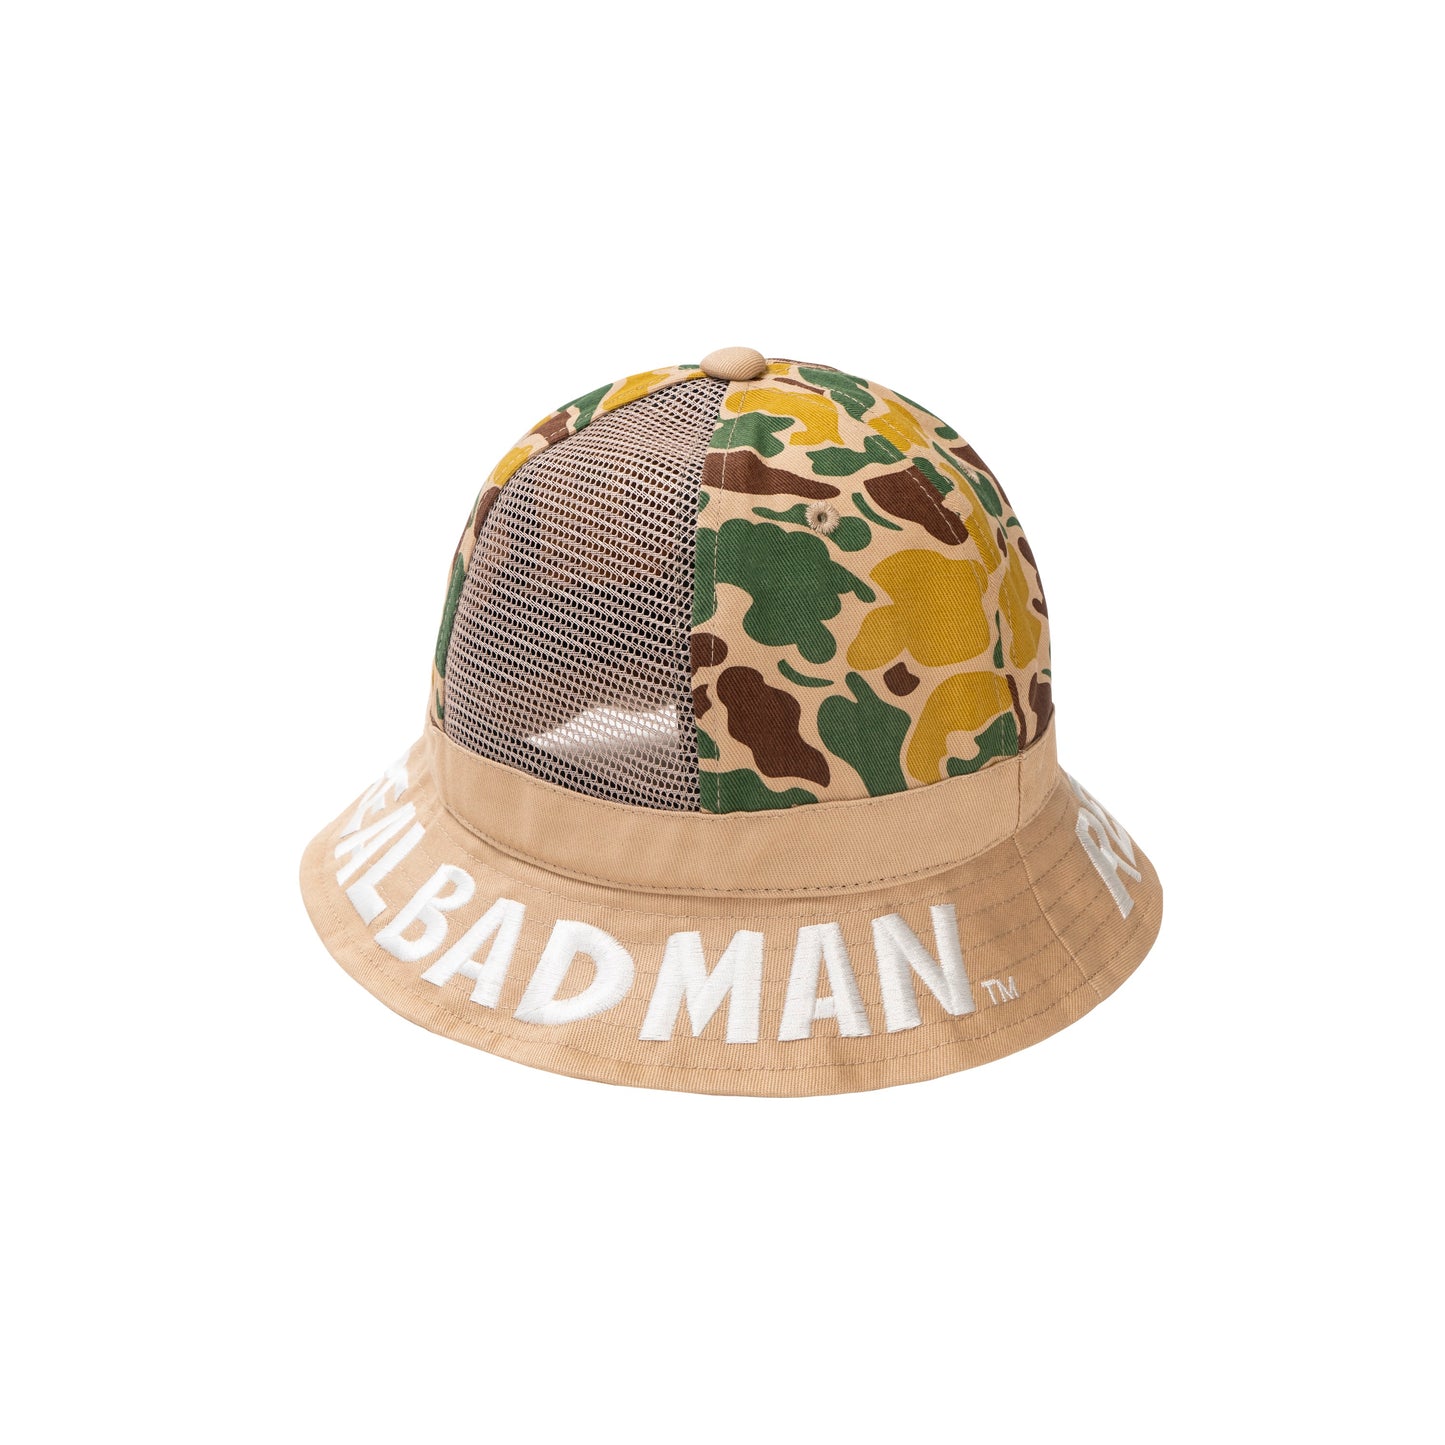 Real Bad Man Lost Hiker Bucket Hat